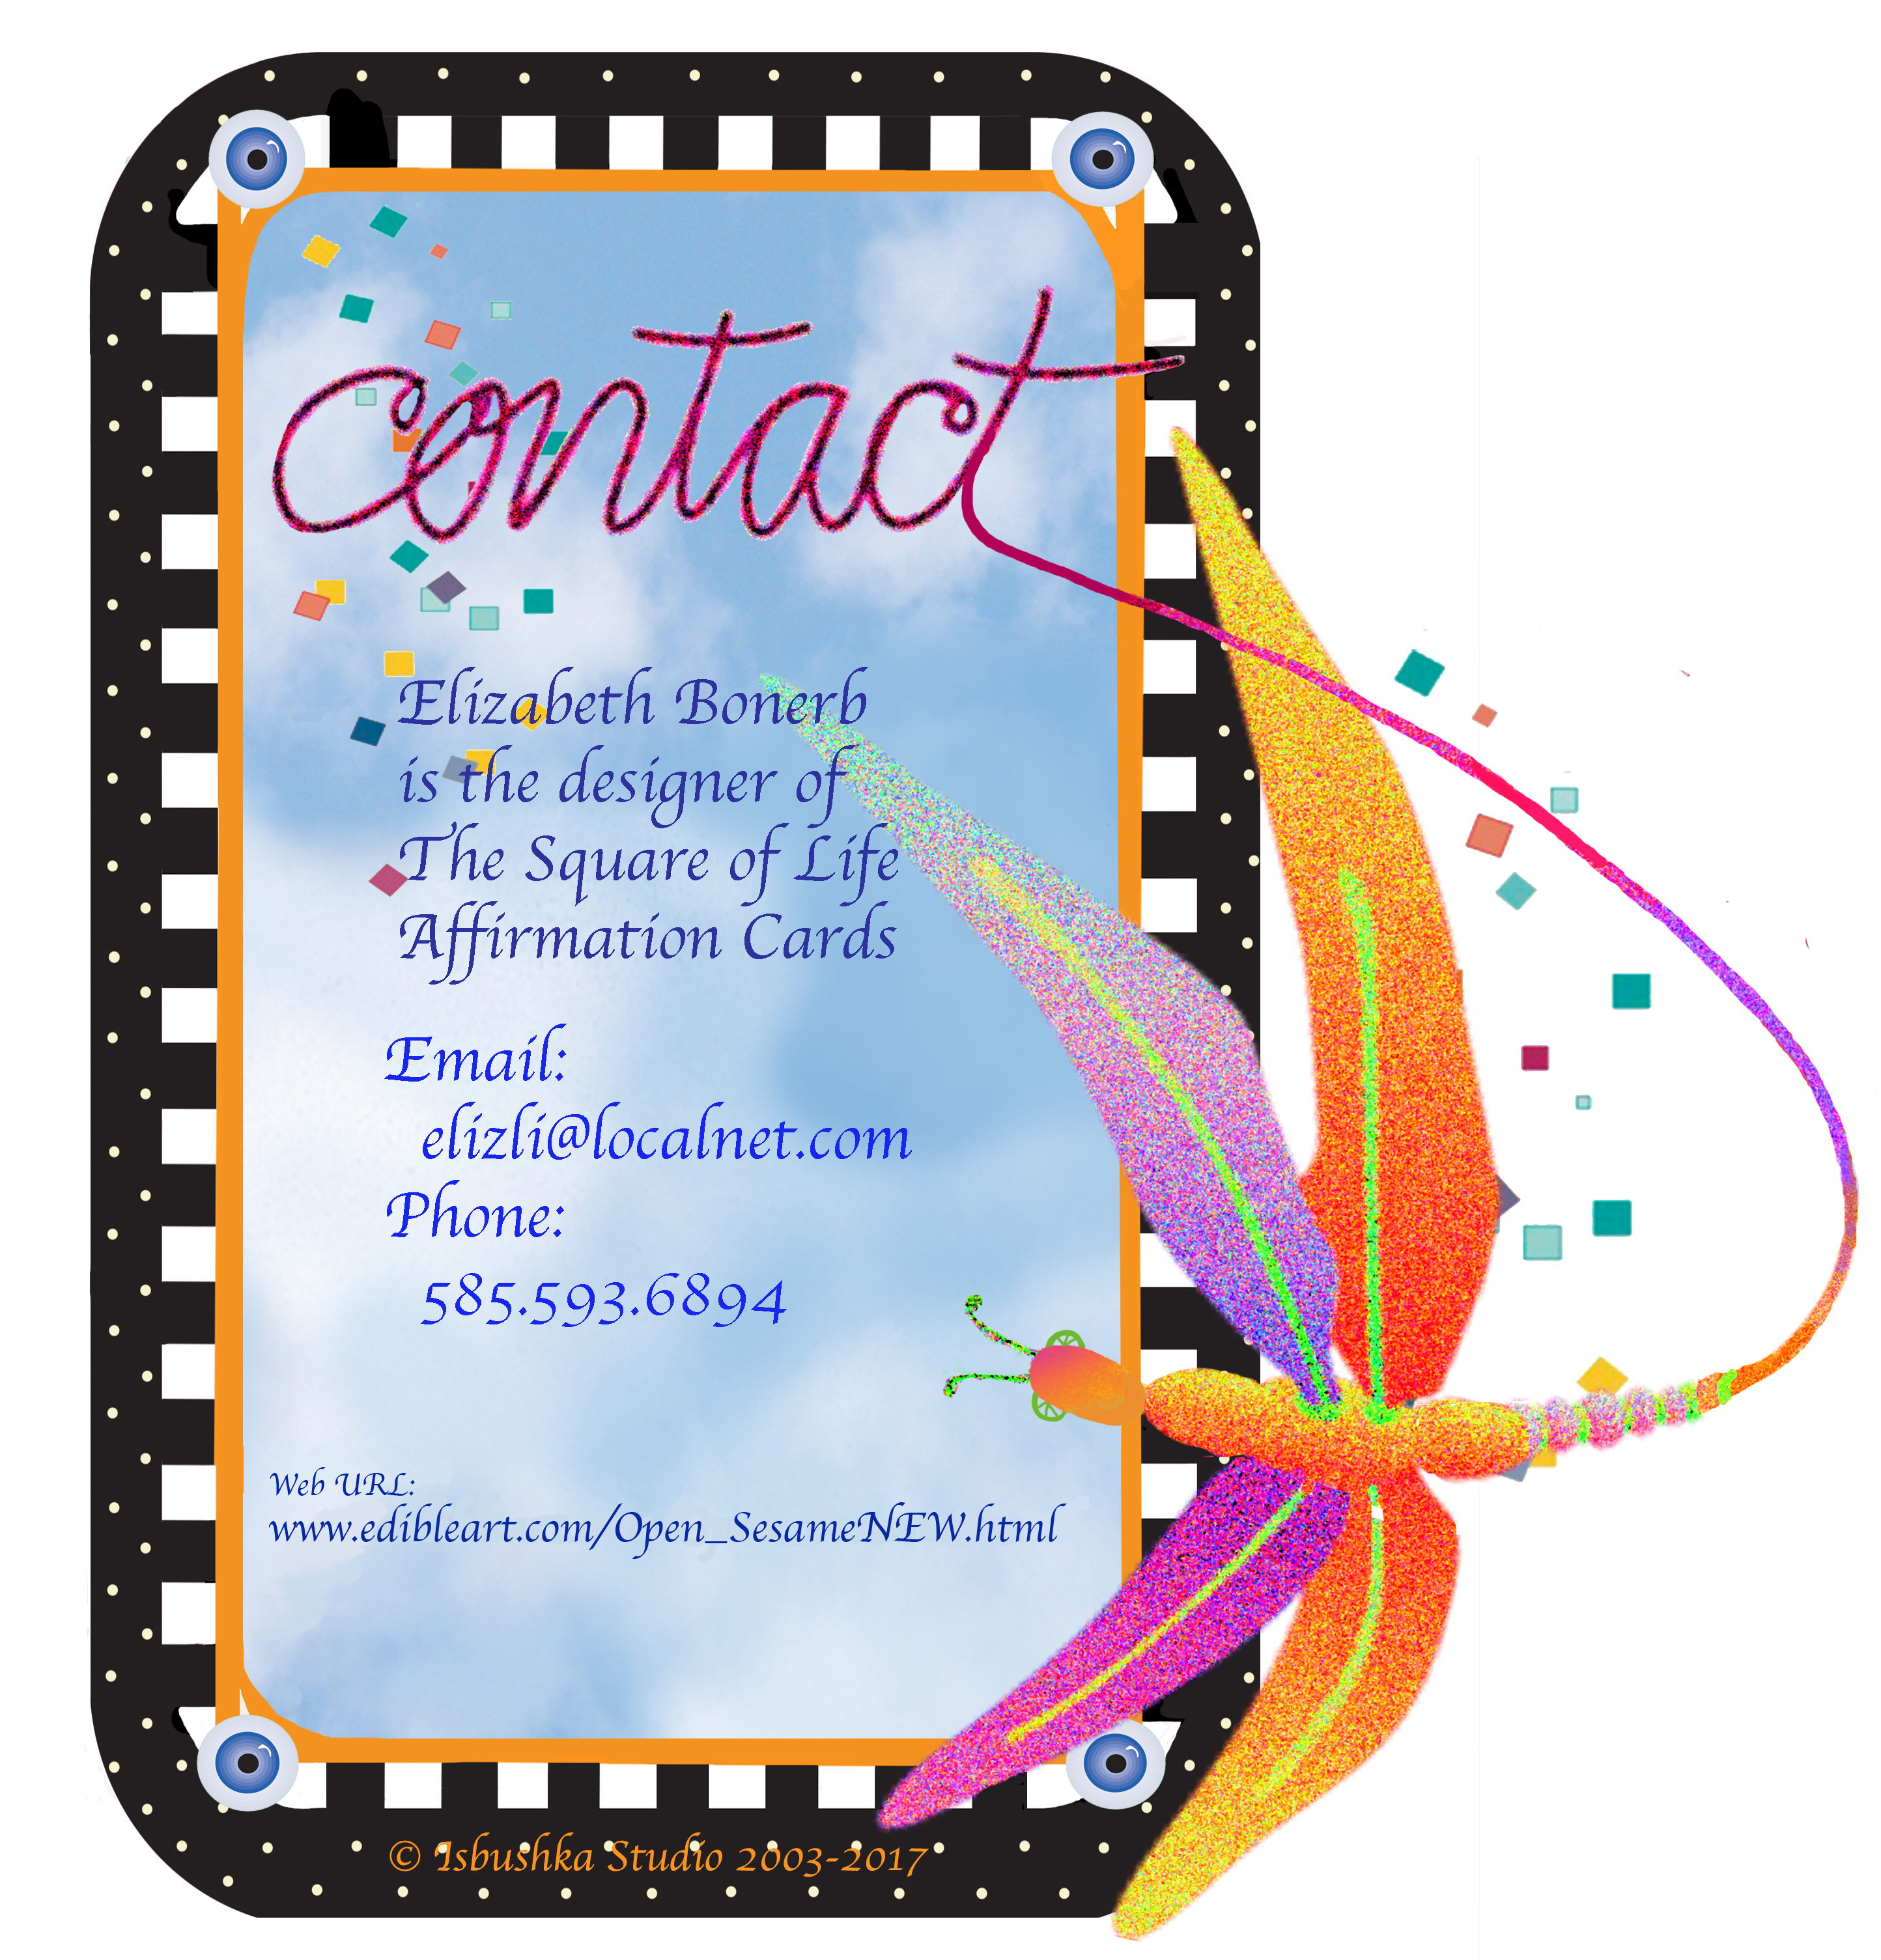 ContactCard